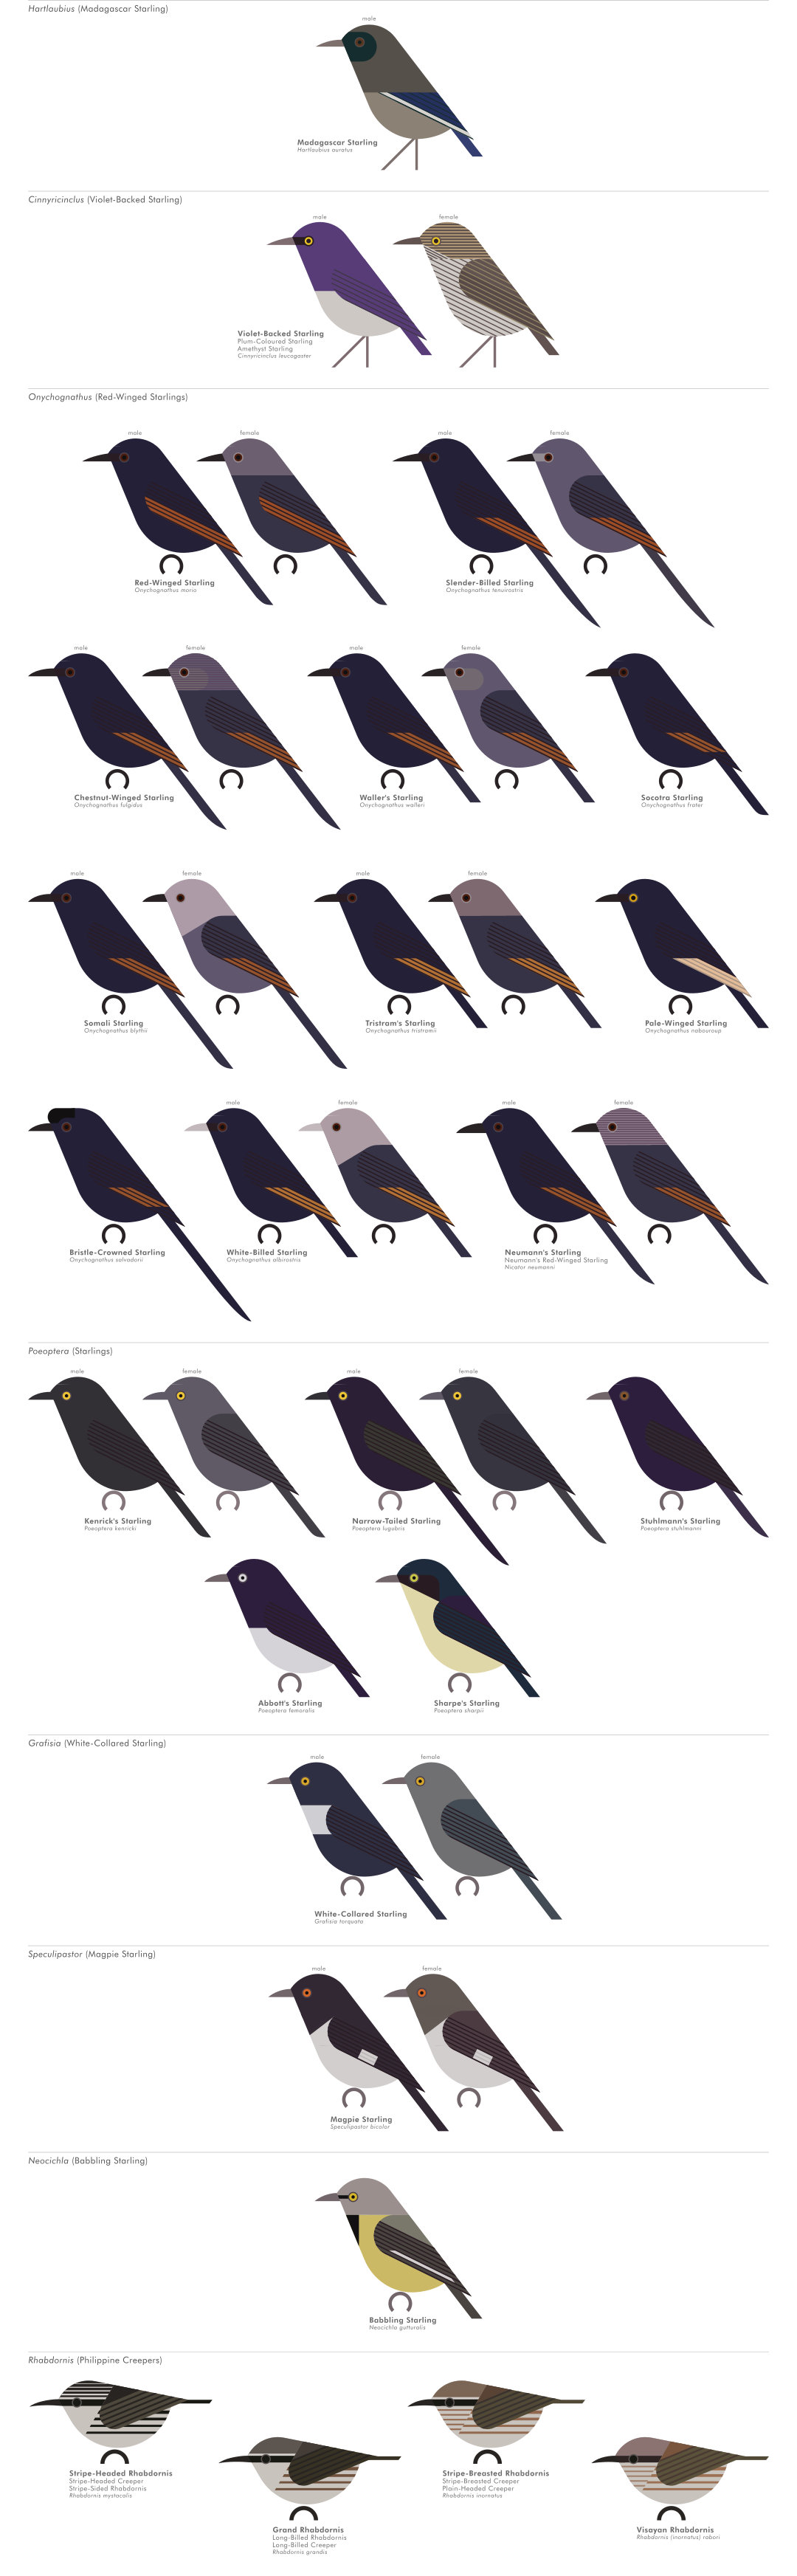 scott partridge - AVE - avian vector encyclopedia - starlings - bird vector art